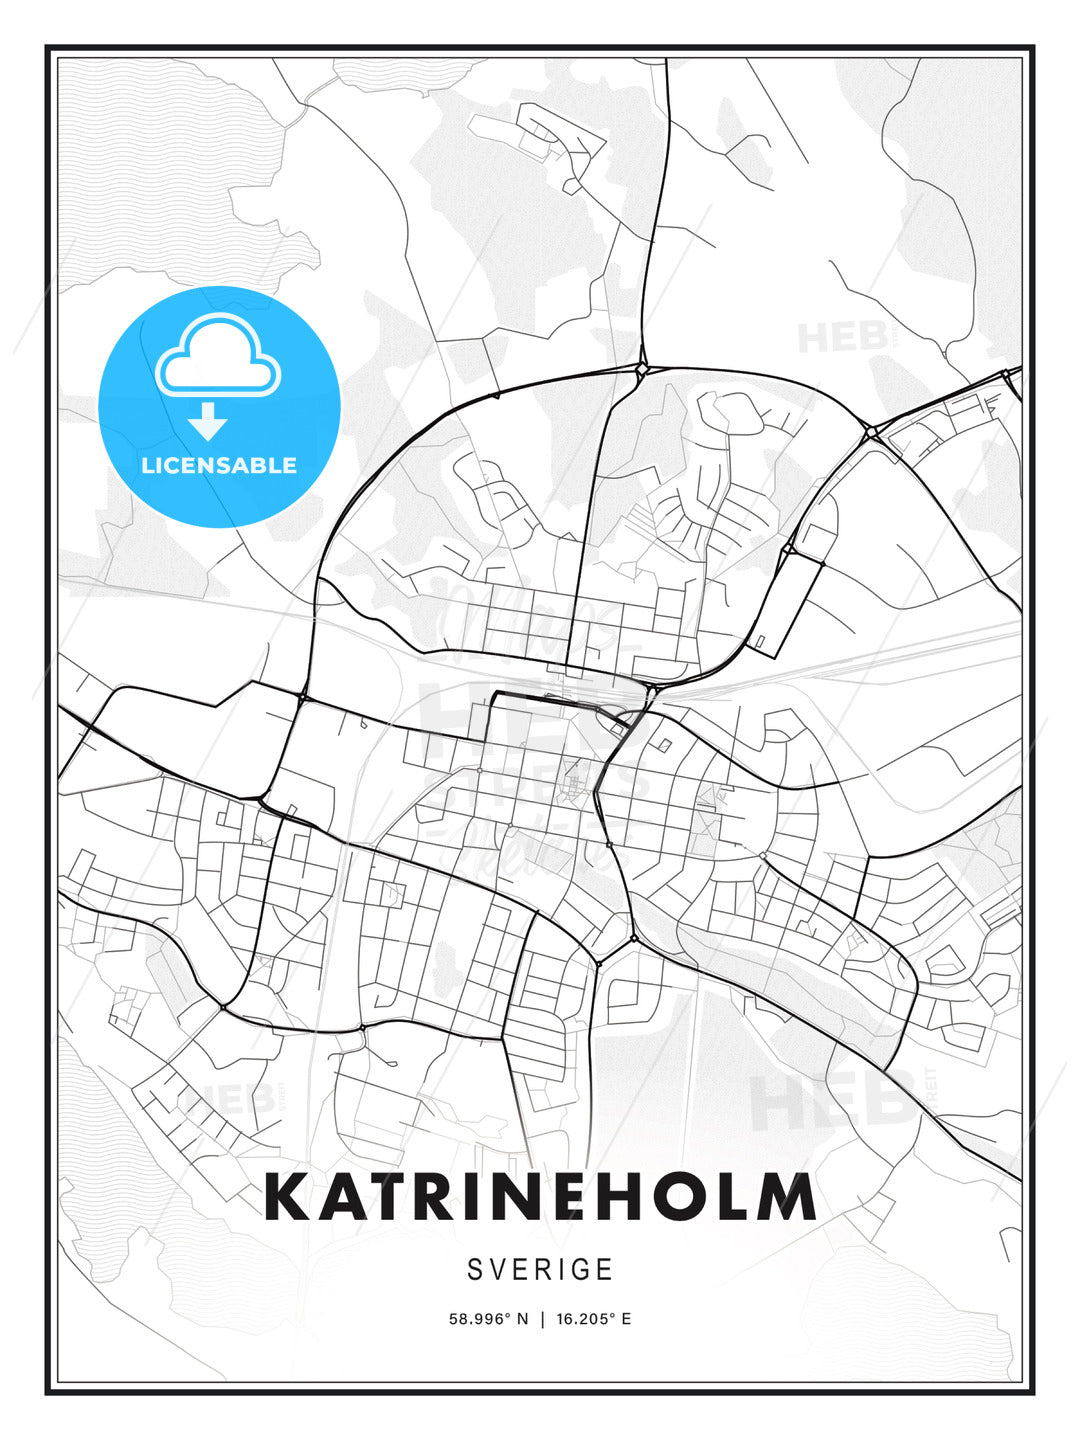 Katrineholm, Sweden, Modern Print Template in Various Formats - HEBSTREITS Sketches